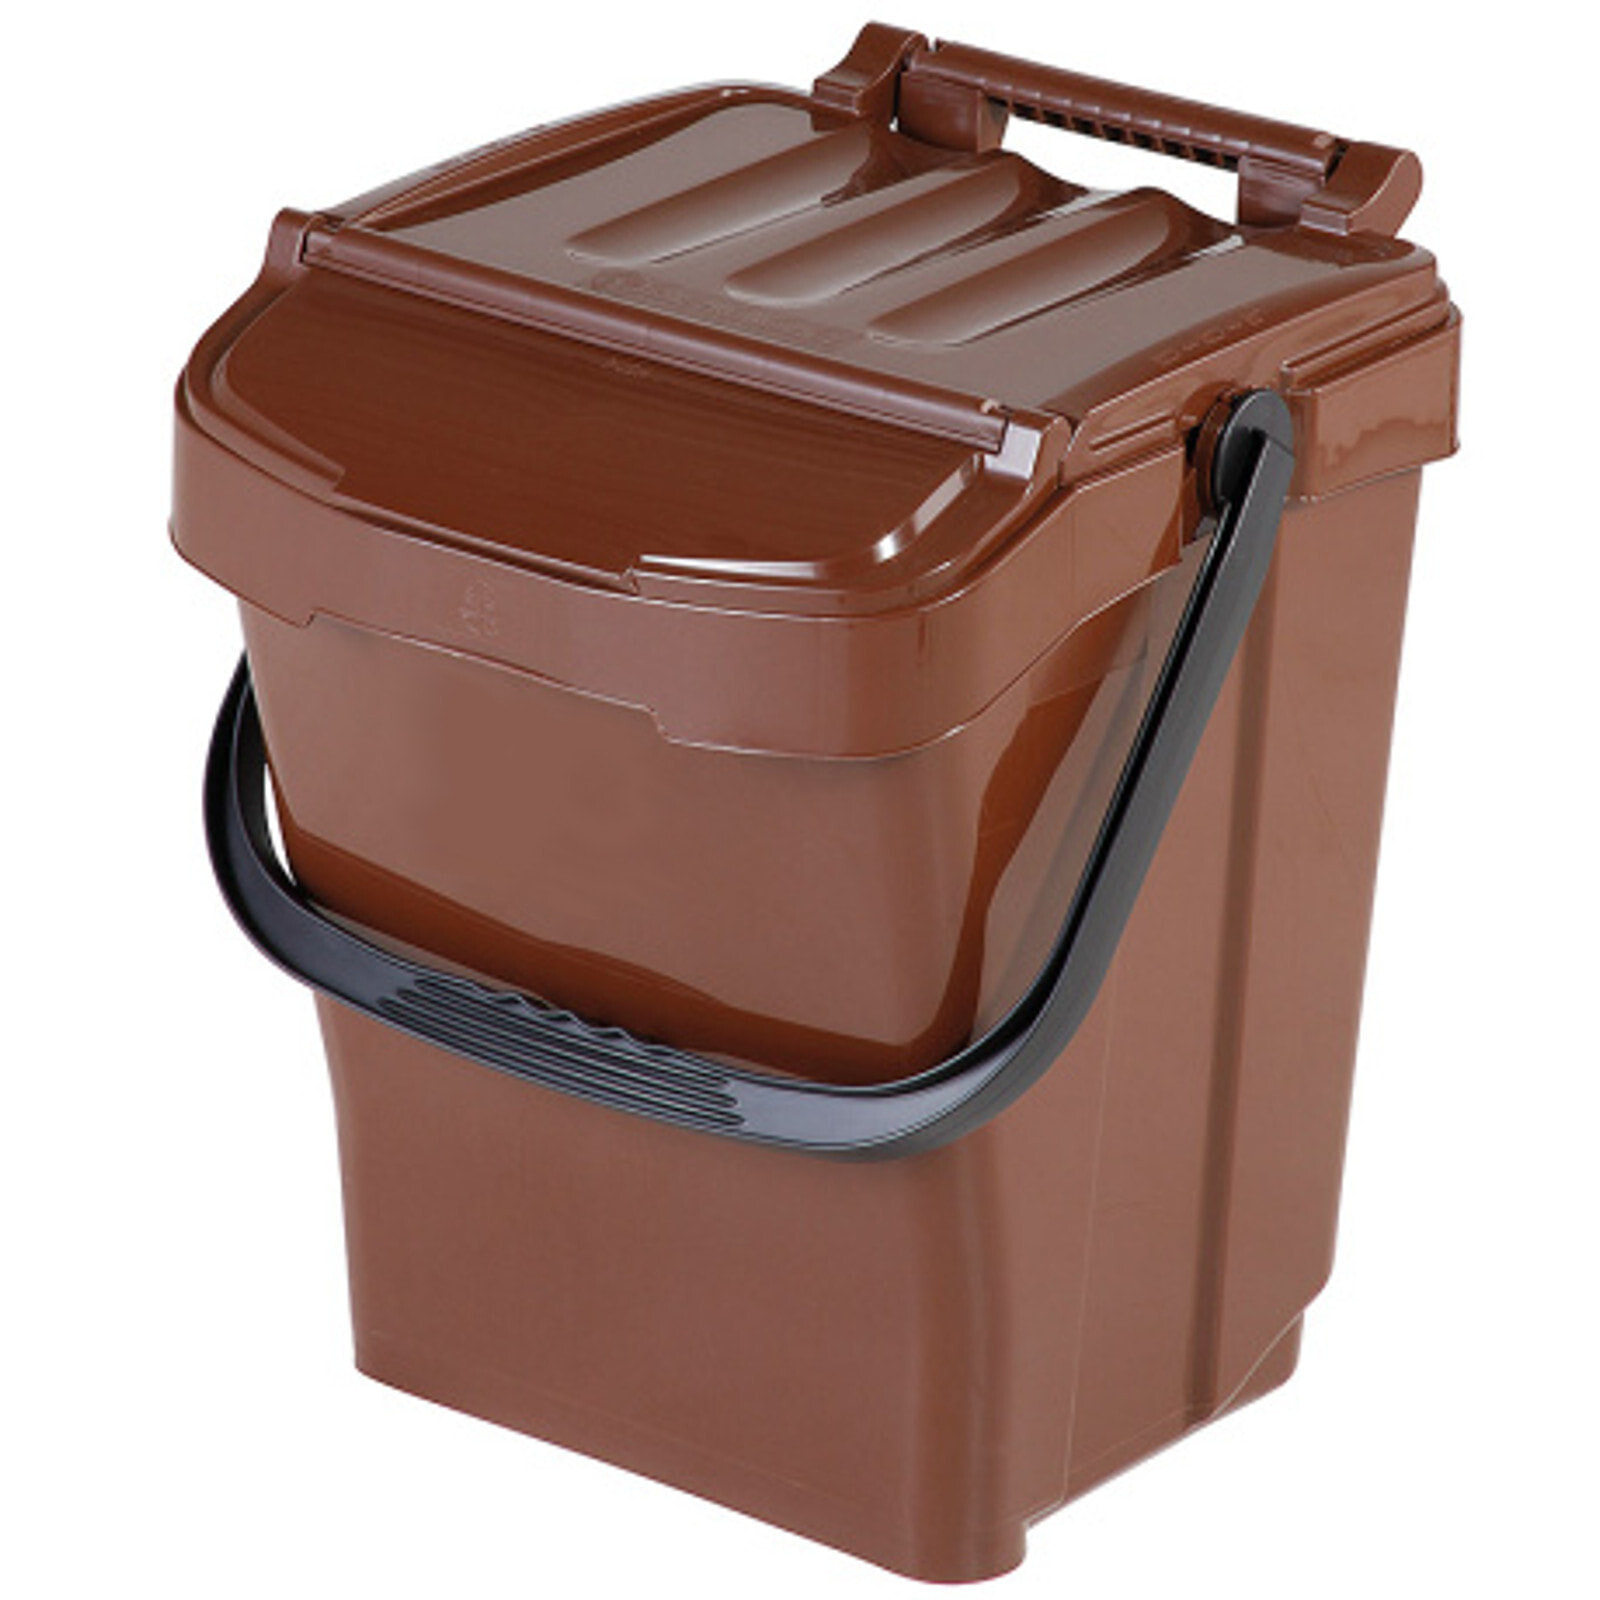 URBA PLUS 40L waste sorting bin for BIO waste sorting - brown